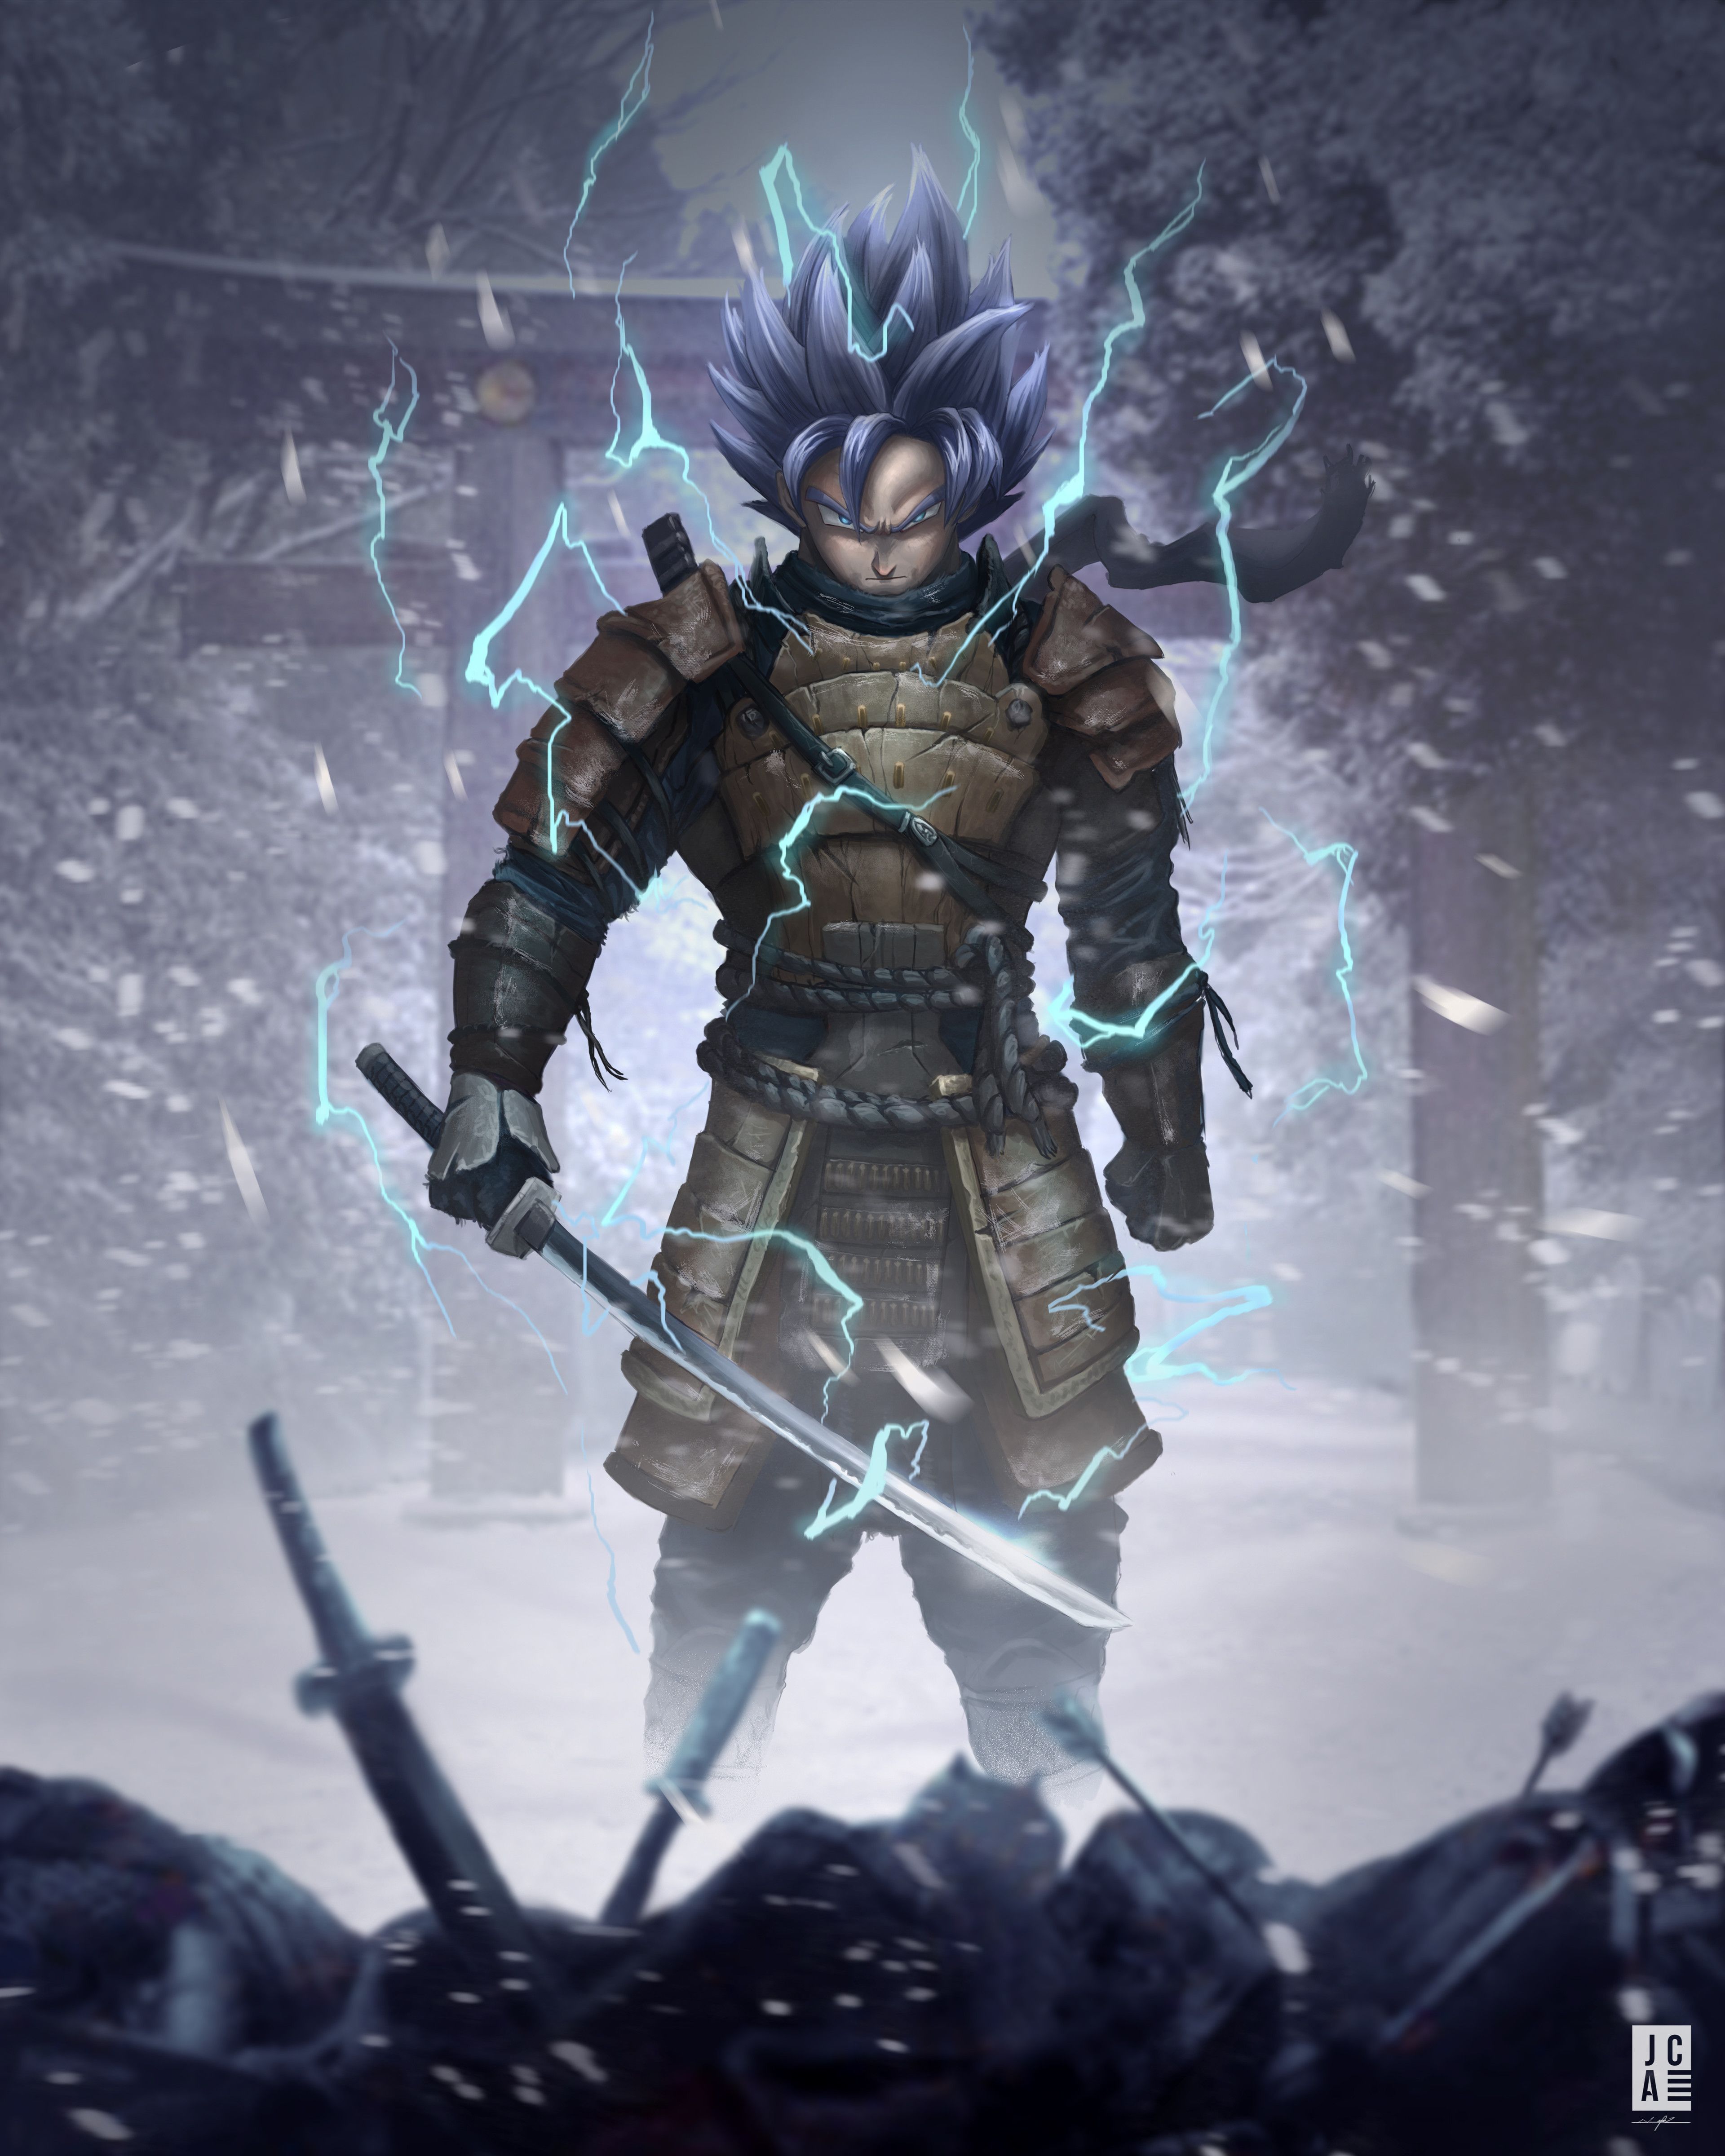 A man with blue hair and swords - Samurai